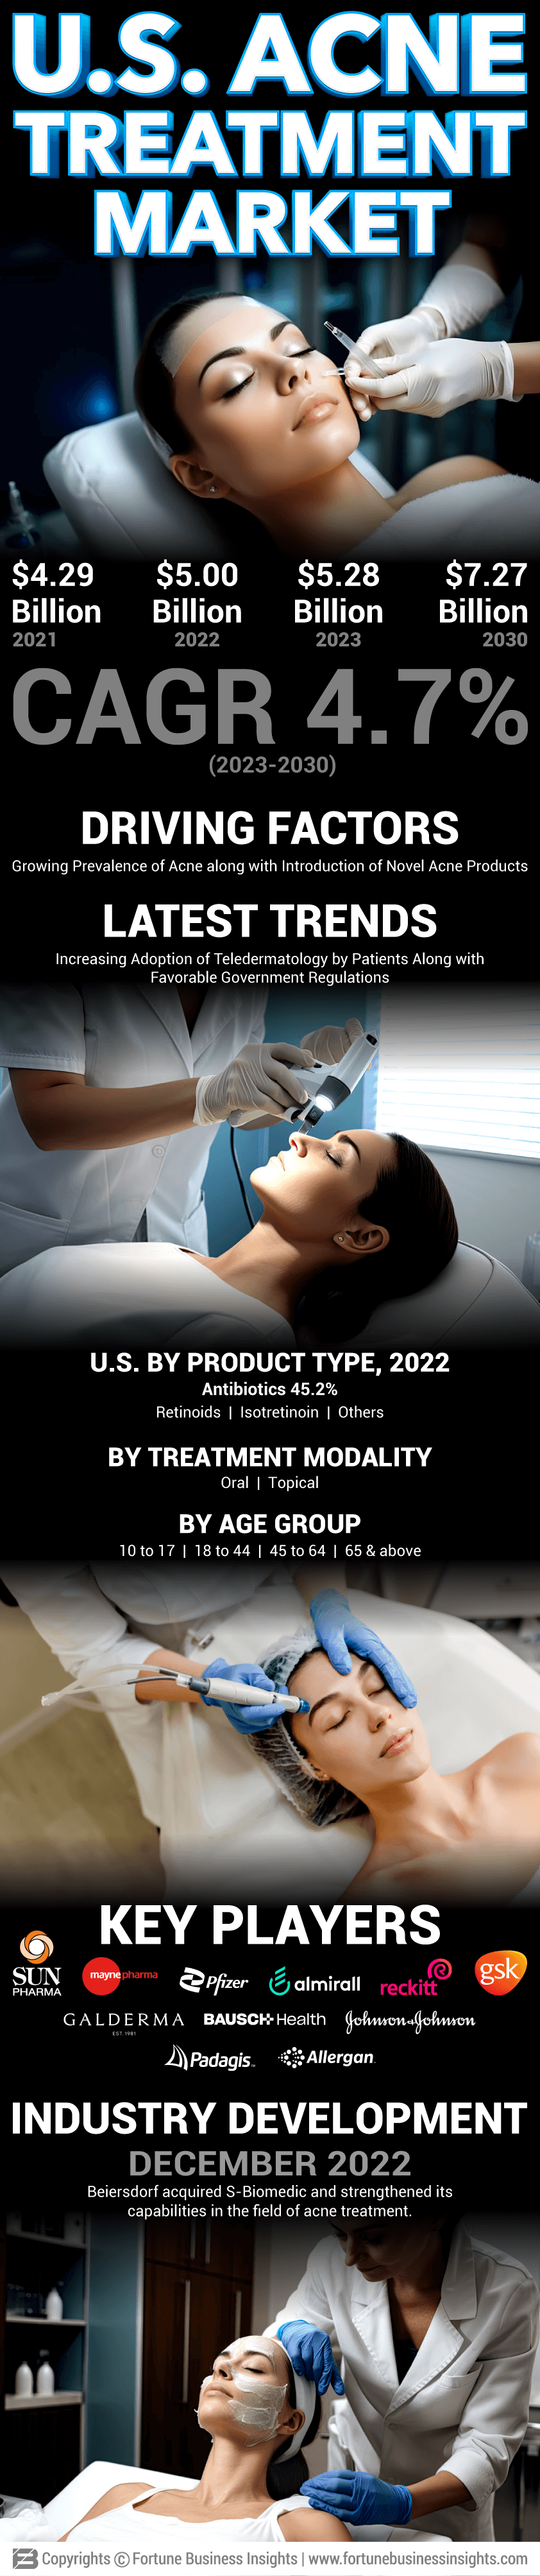 U.S. Acne Treatment Market